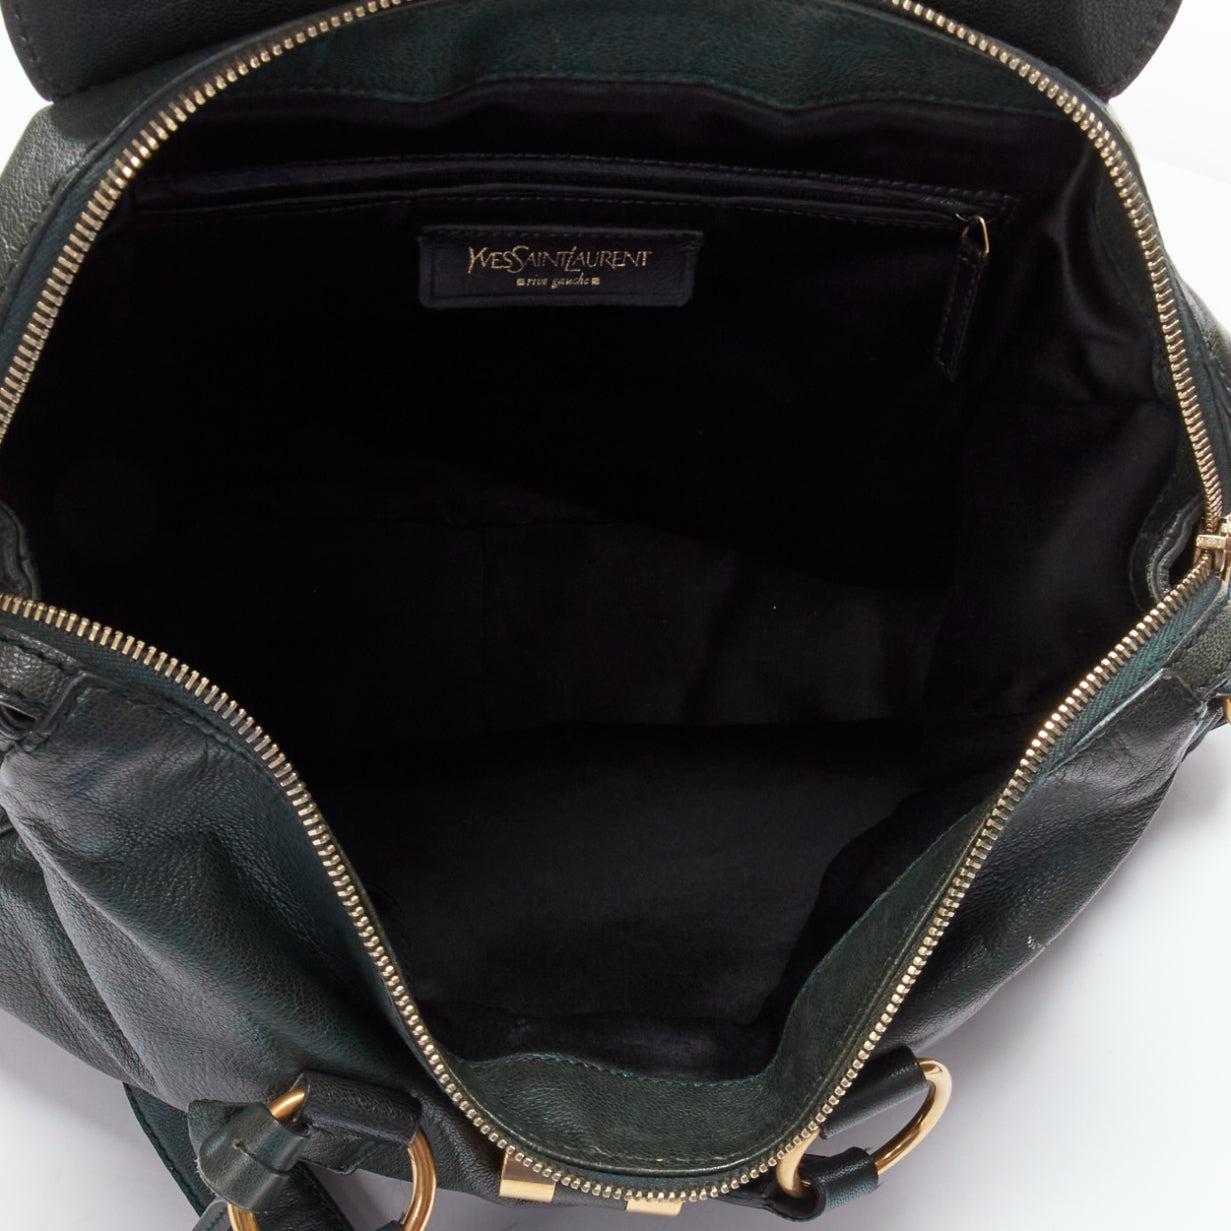 YVES SAINT LAURENT Rive Gauche Muse dark green leather GHW satchel bag 6